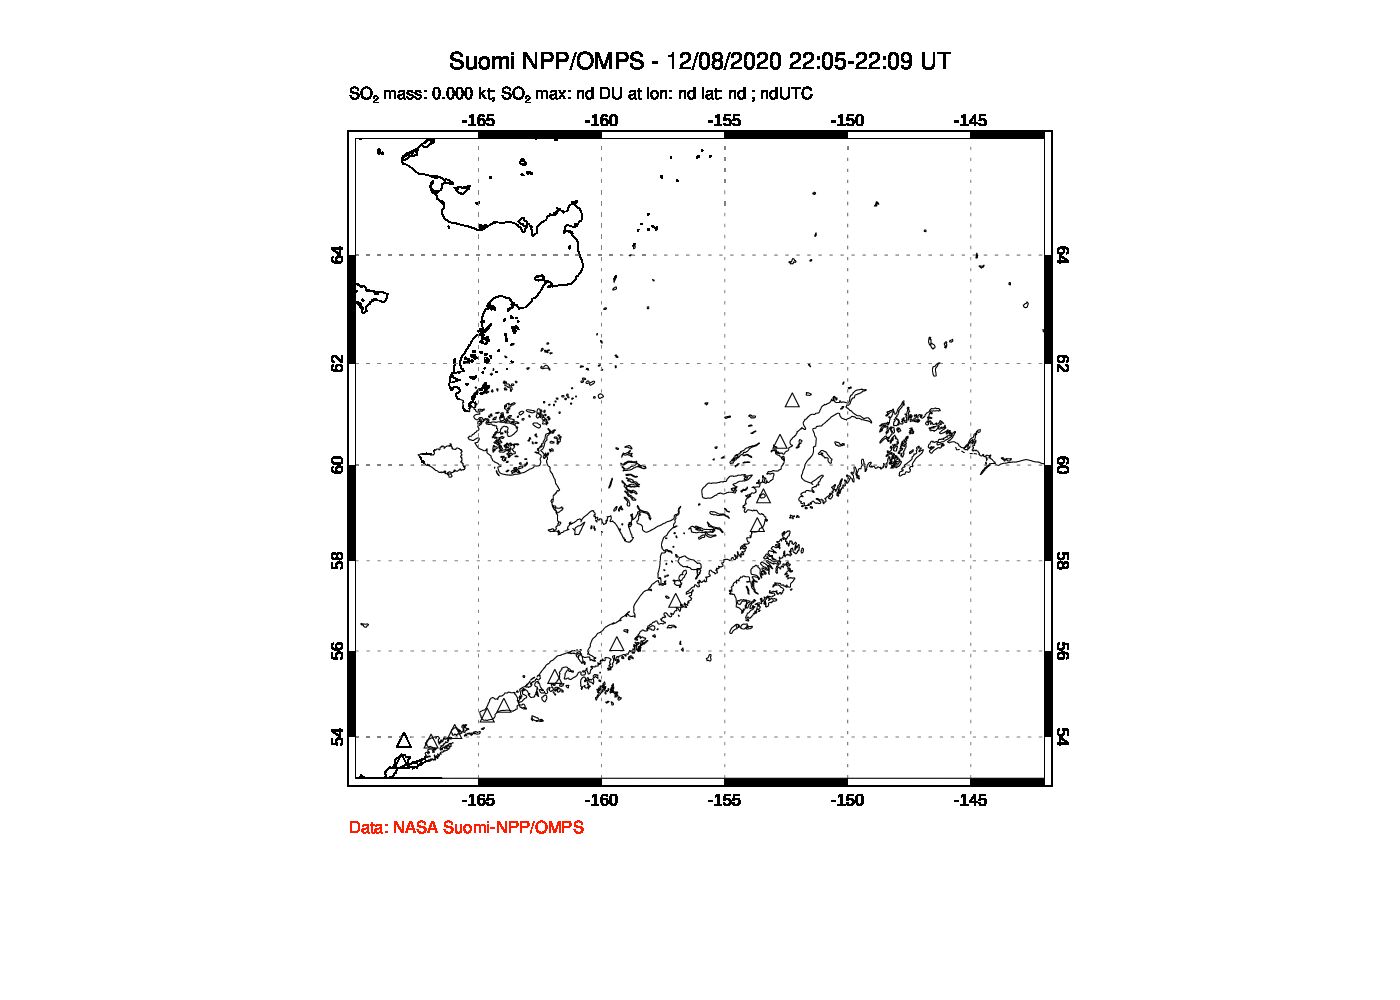 A sulfur dioxide image over Alaska, USA on Dec 08, 2020.